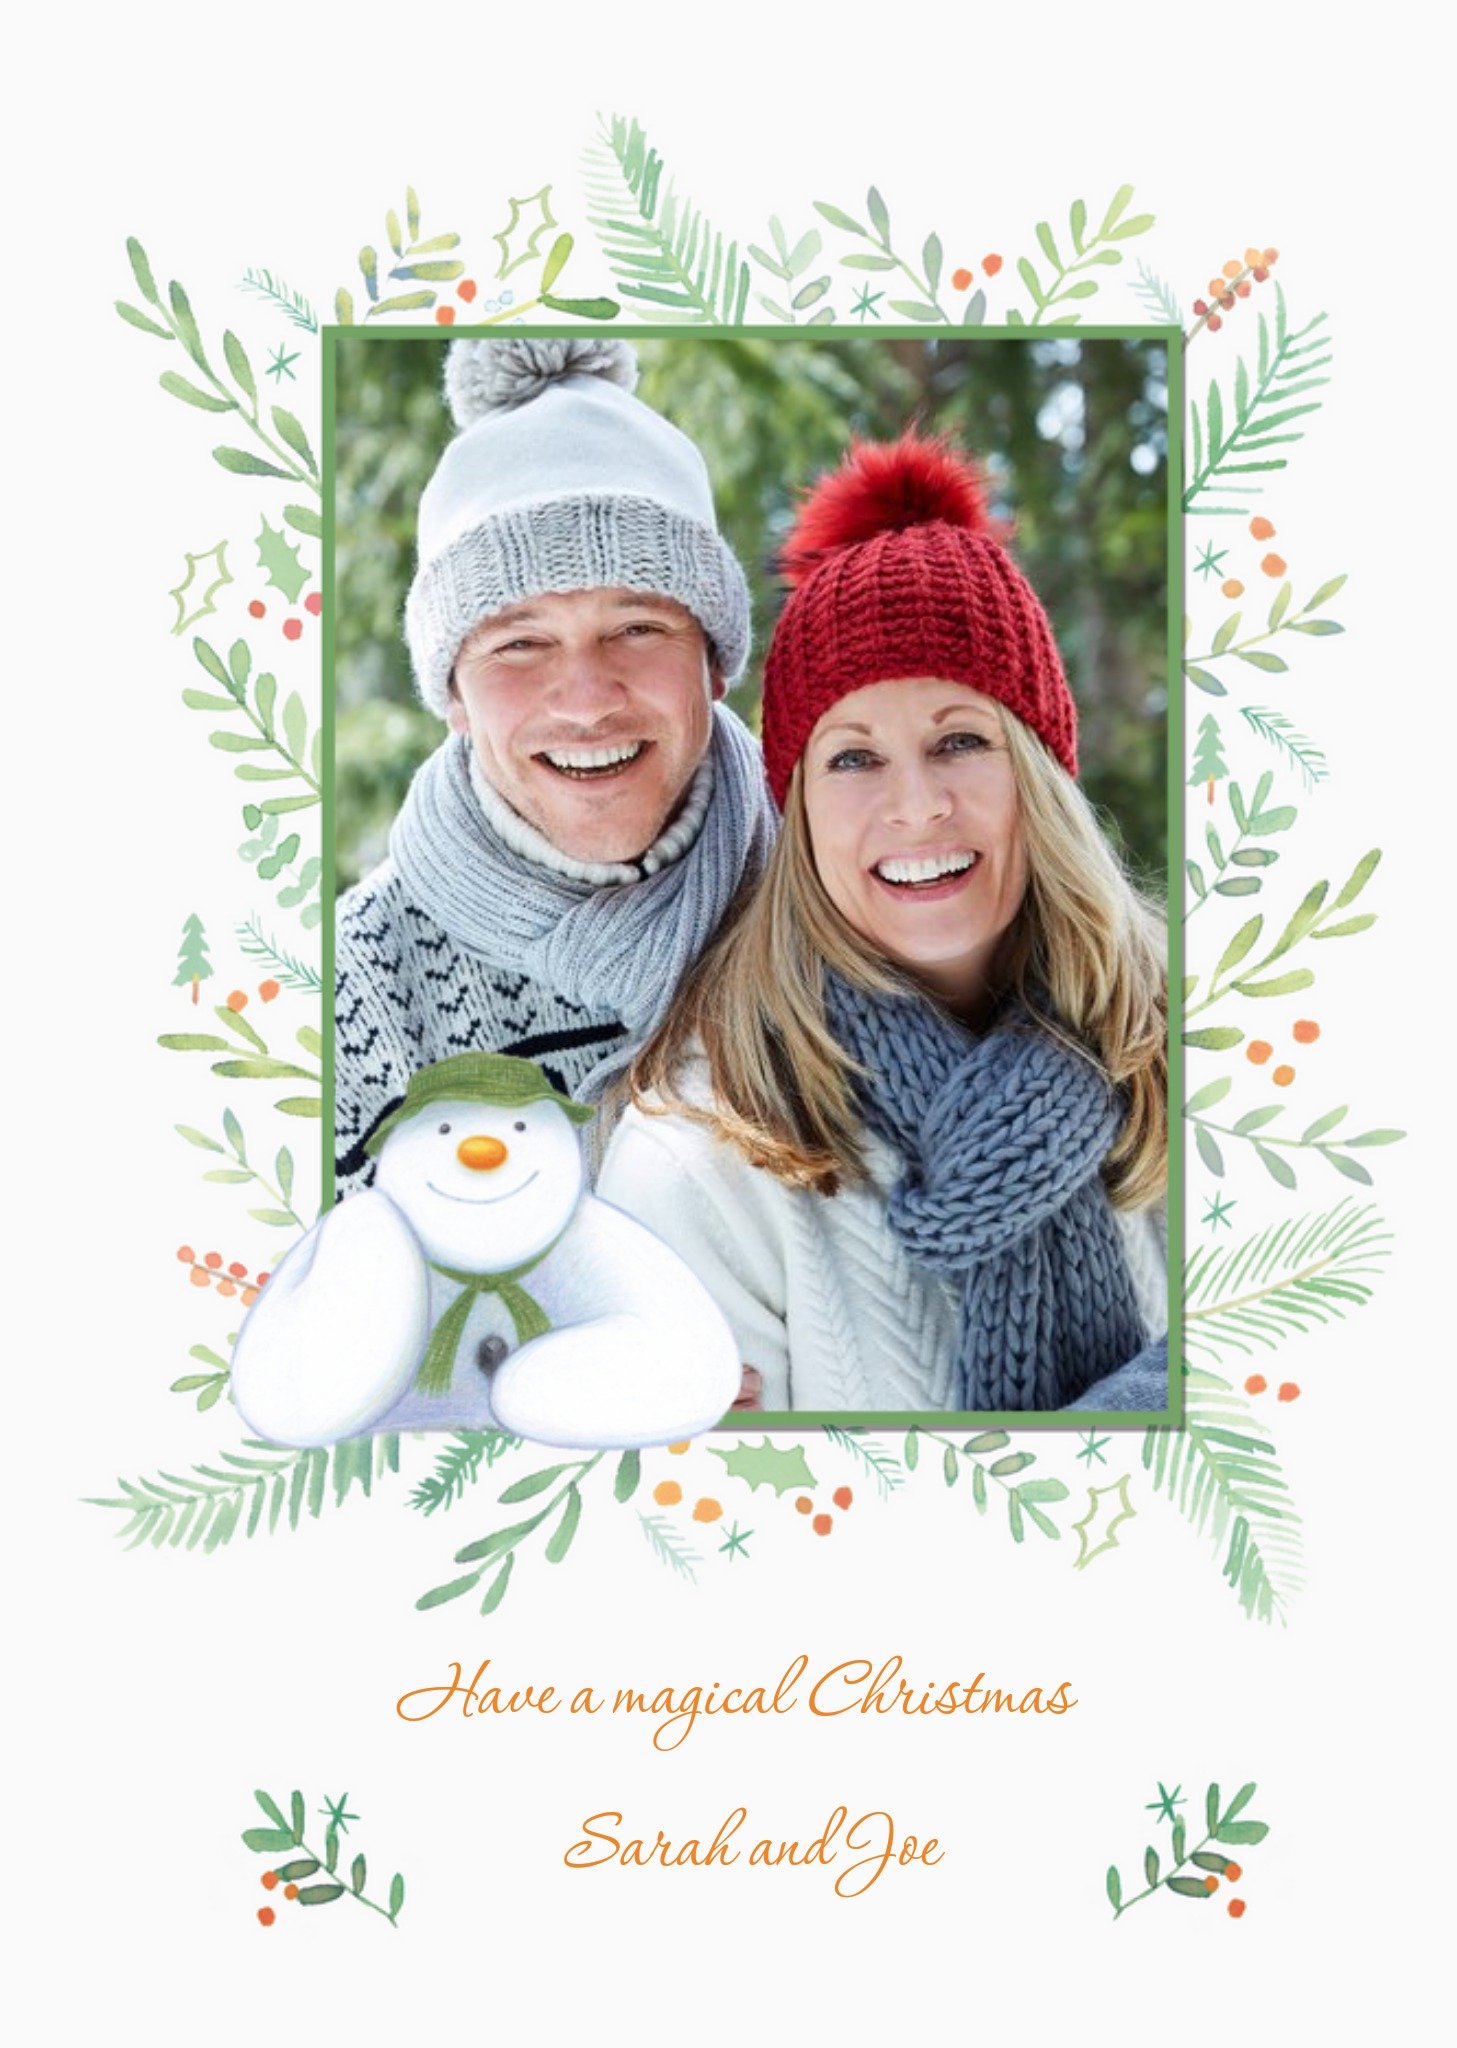 The Snowman Magical Christmas Photo Upload Card Ecard